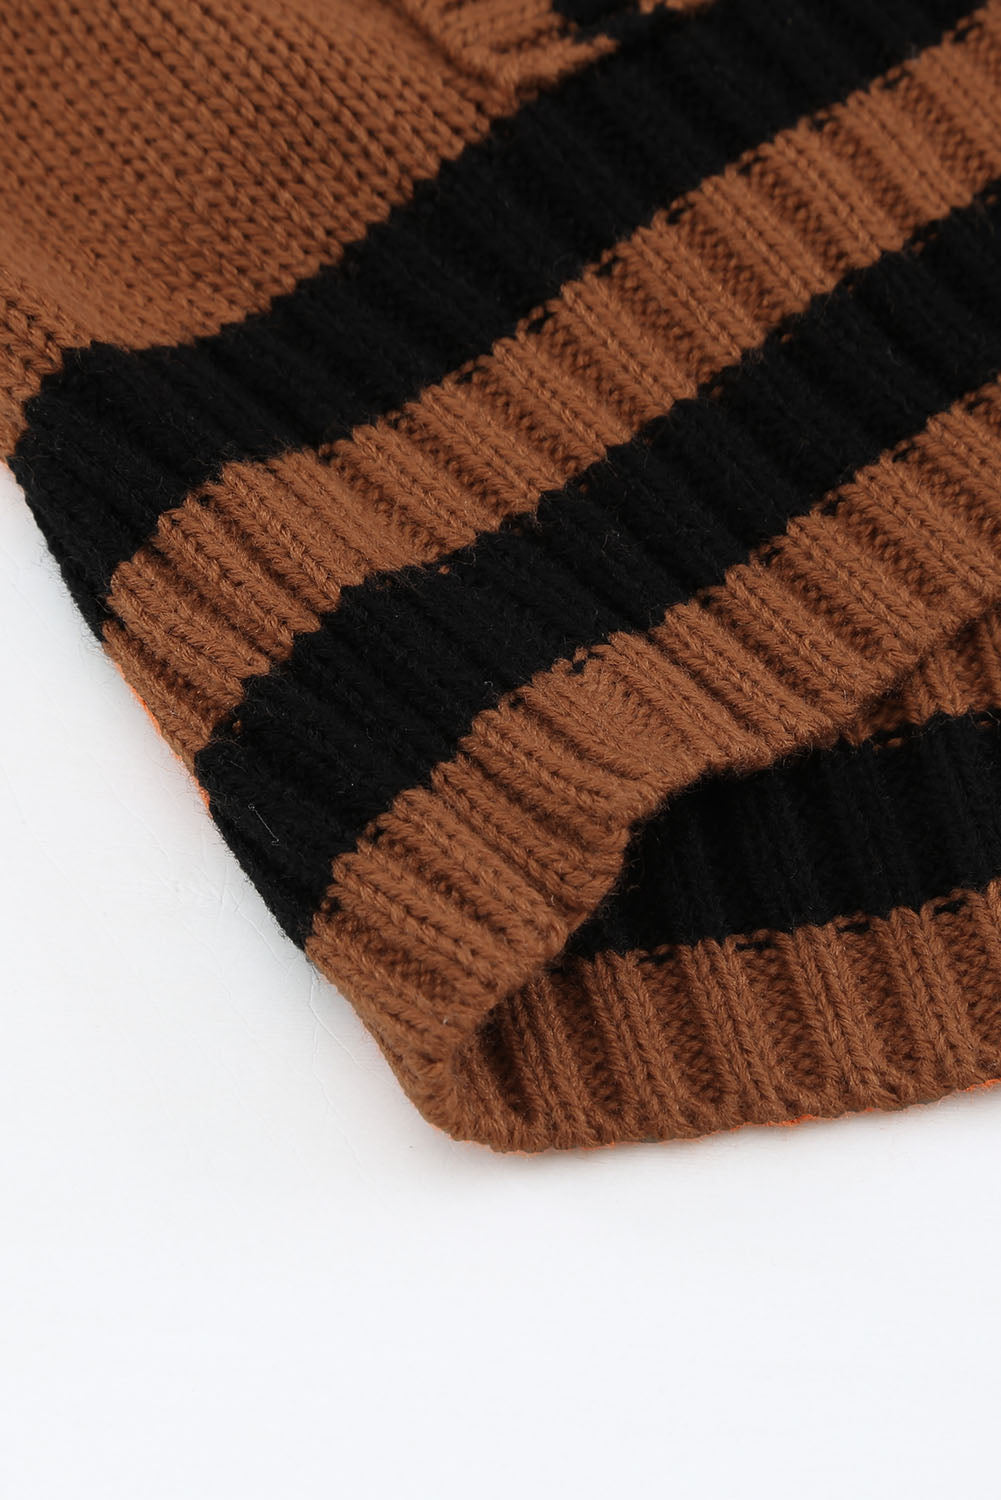 V Neck Contrast Stripes Trims Short Sleeve Sweater Sweaters & Cardigans JT's Designer Fashion